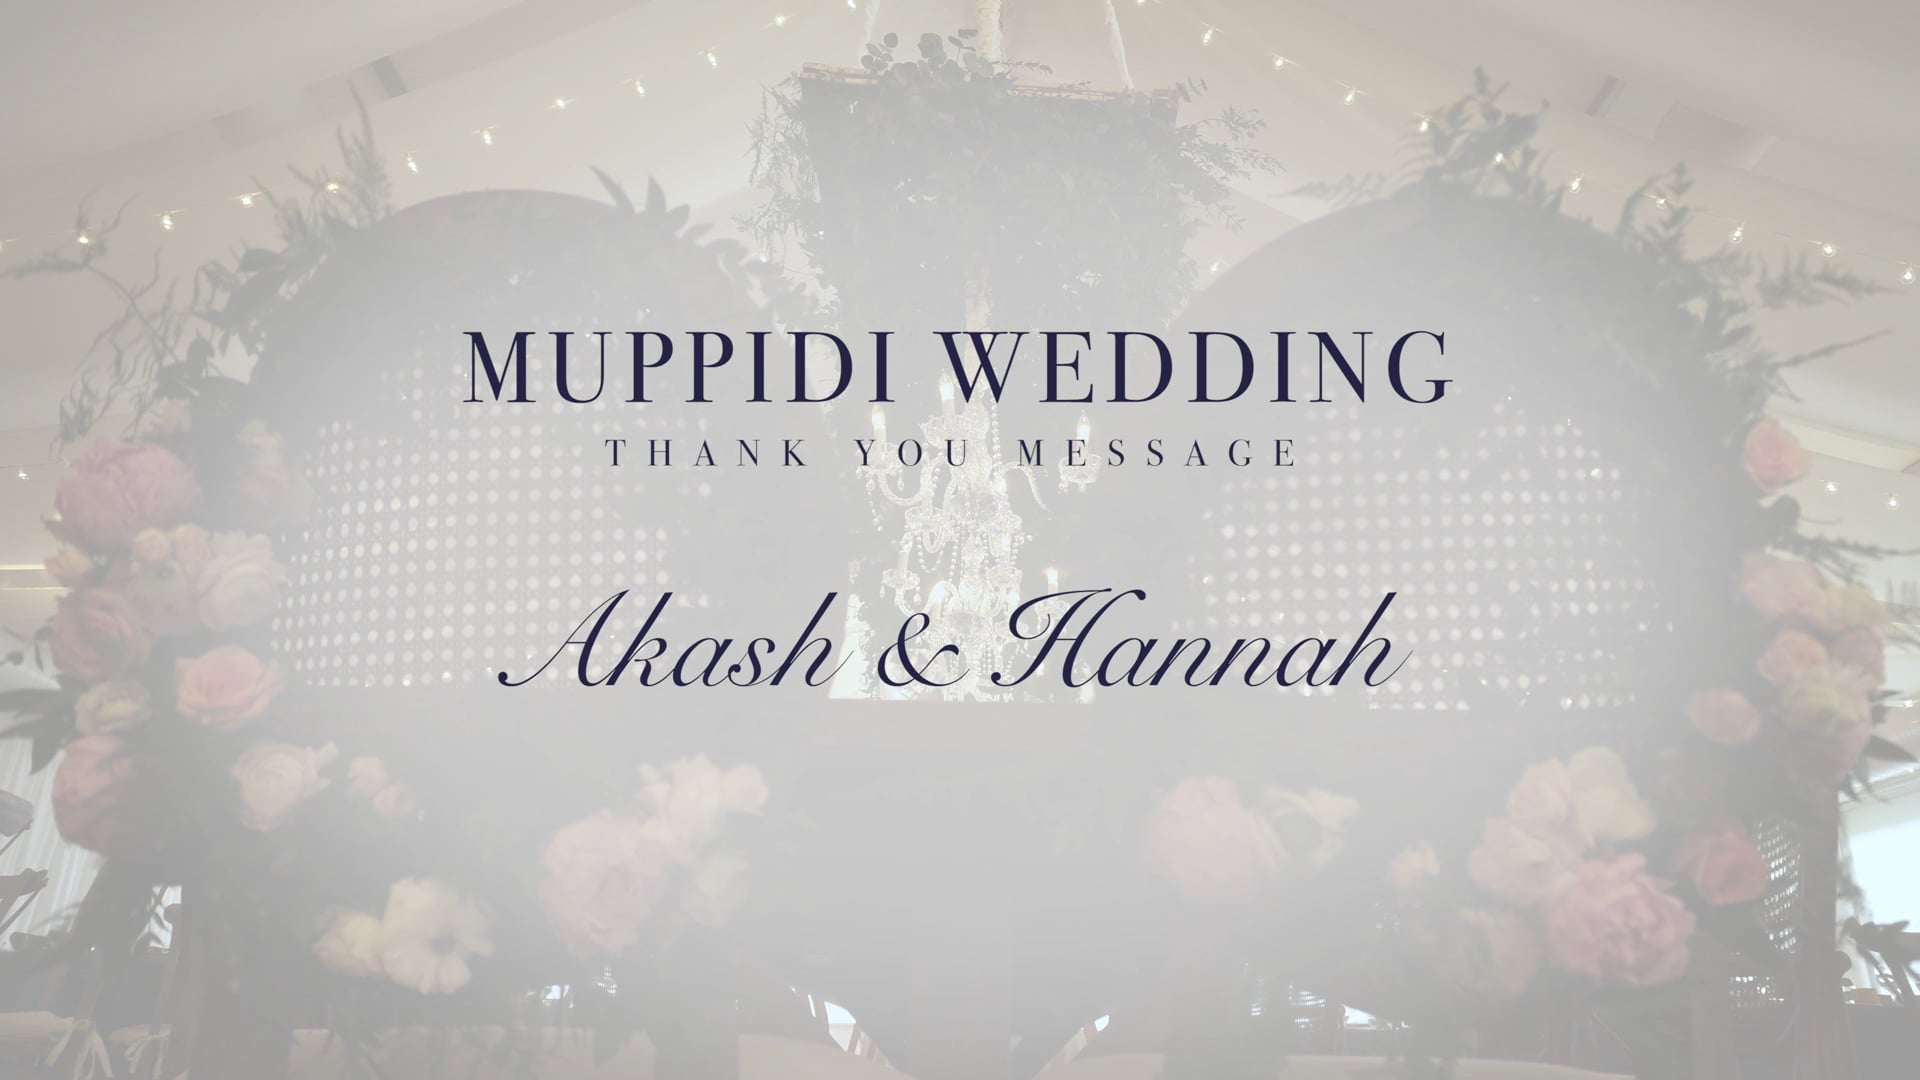 Muppidi Wedding - Thank you message